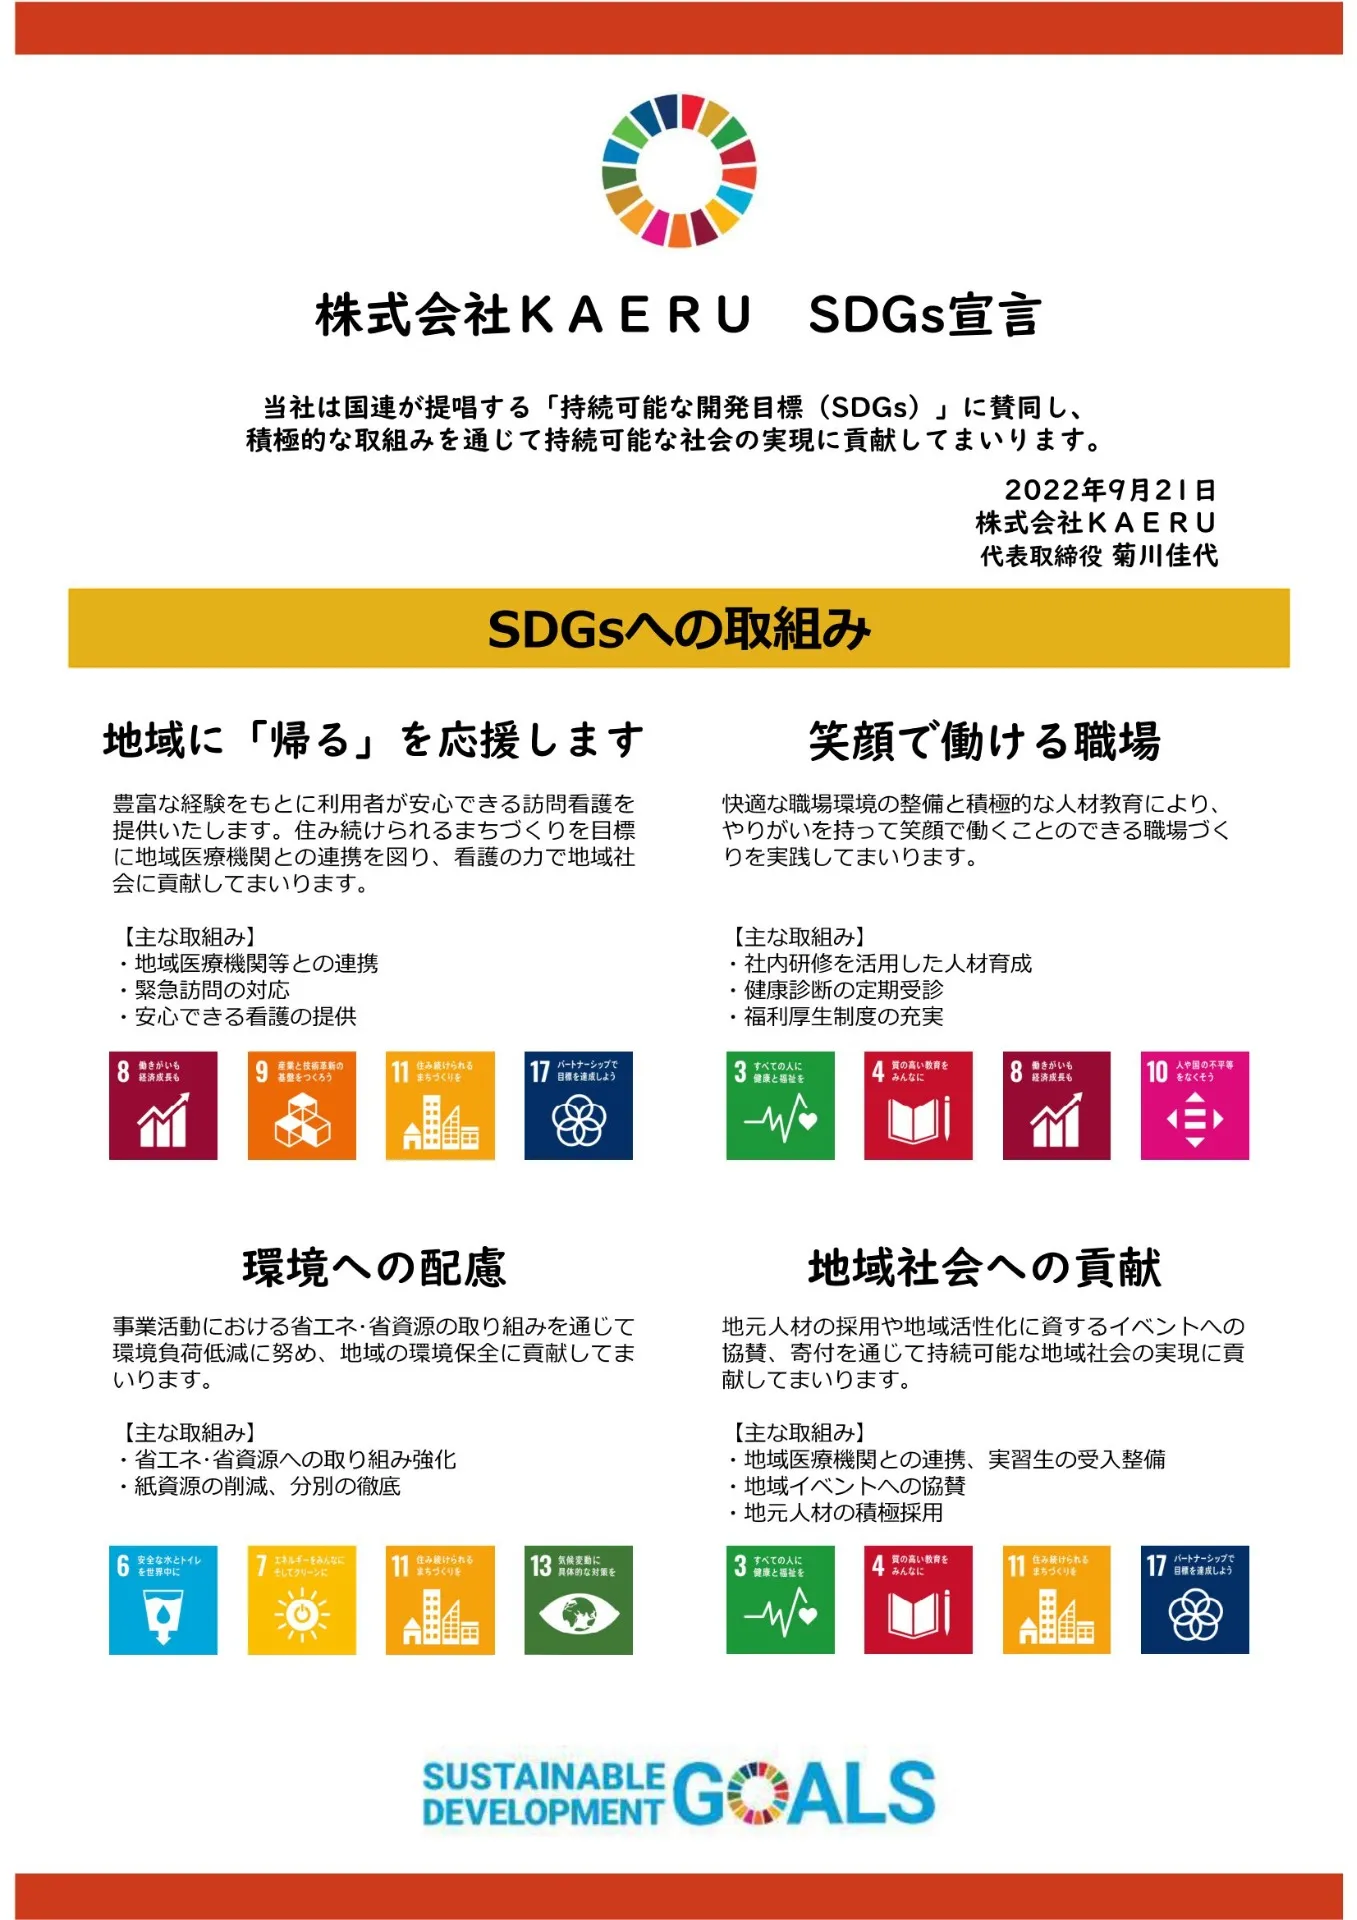 SDGs目標11